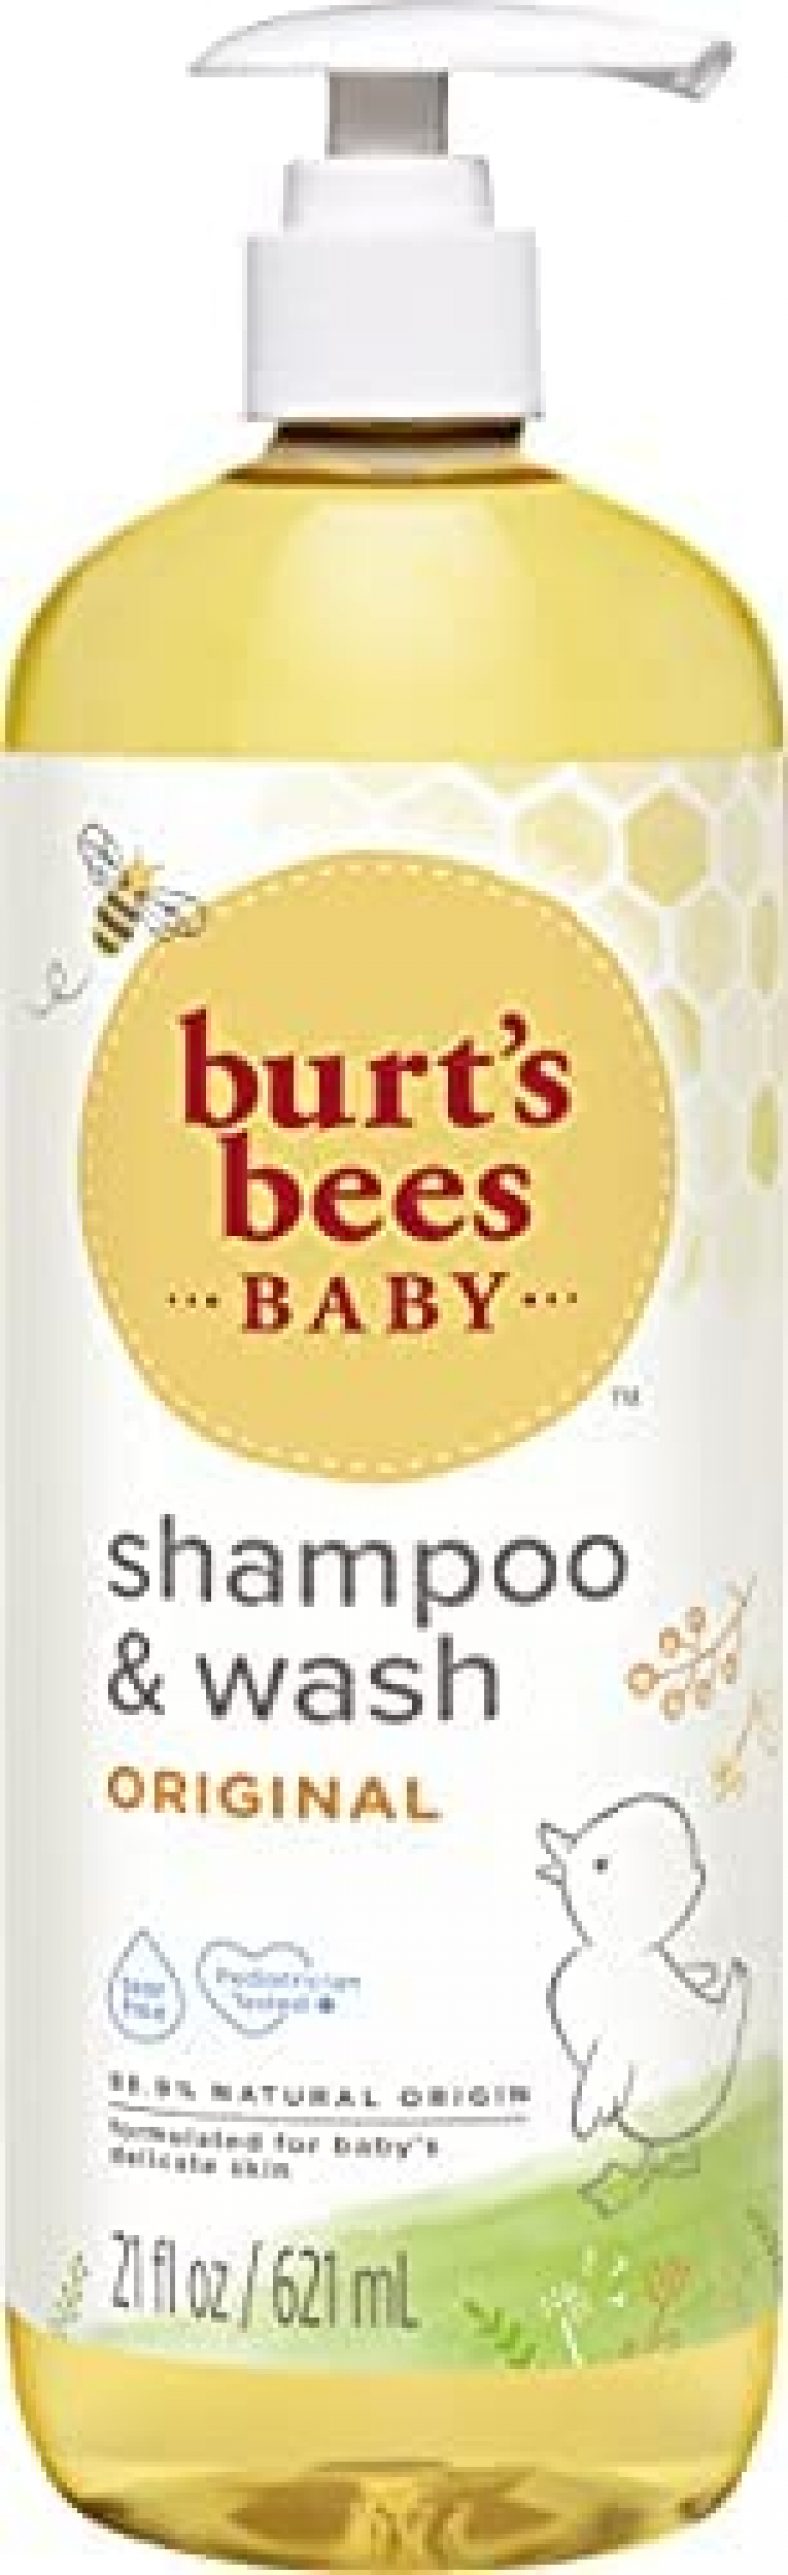 Baby Shampoo & Wash, Burt’s Bees Tear Free Soap, Natural Baby Care, Original, 21 Ounce (Packaging May Vary)